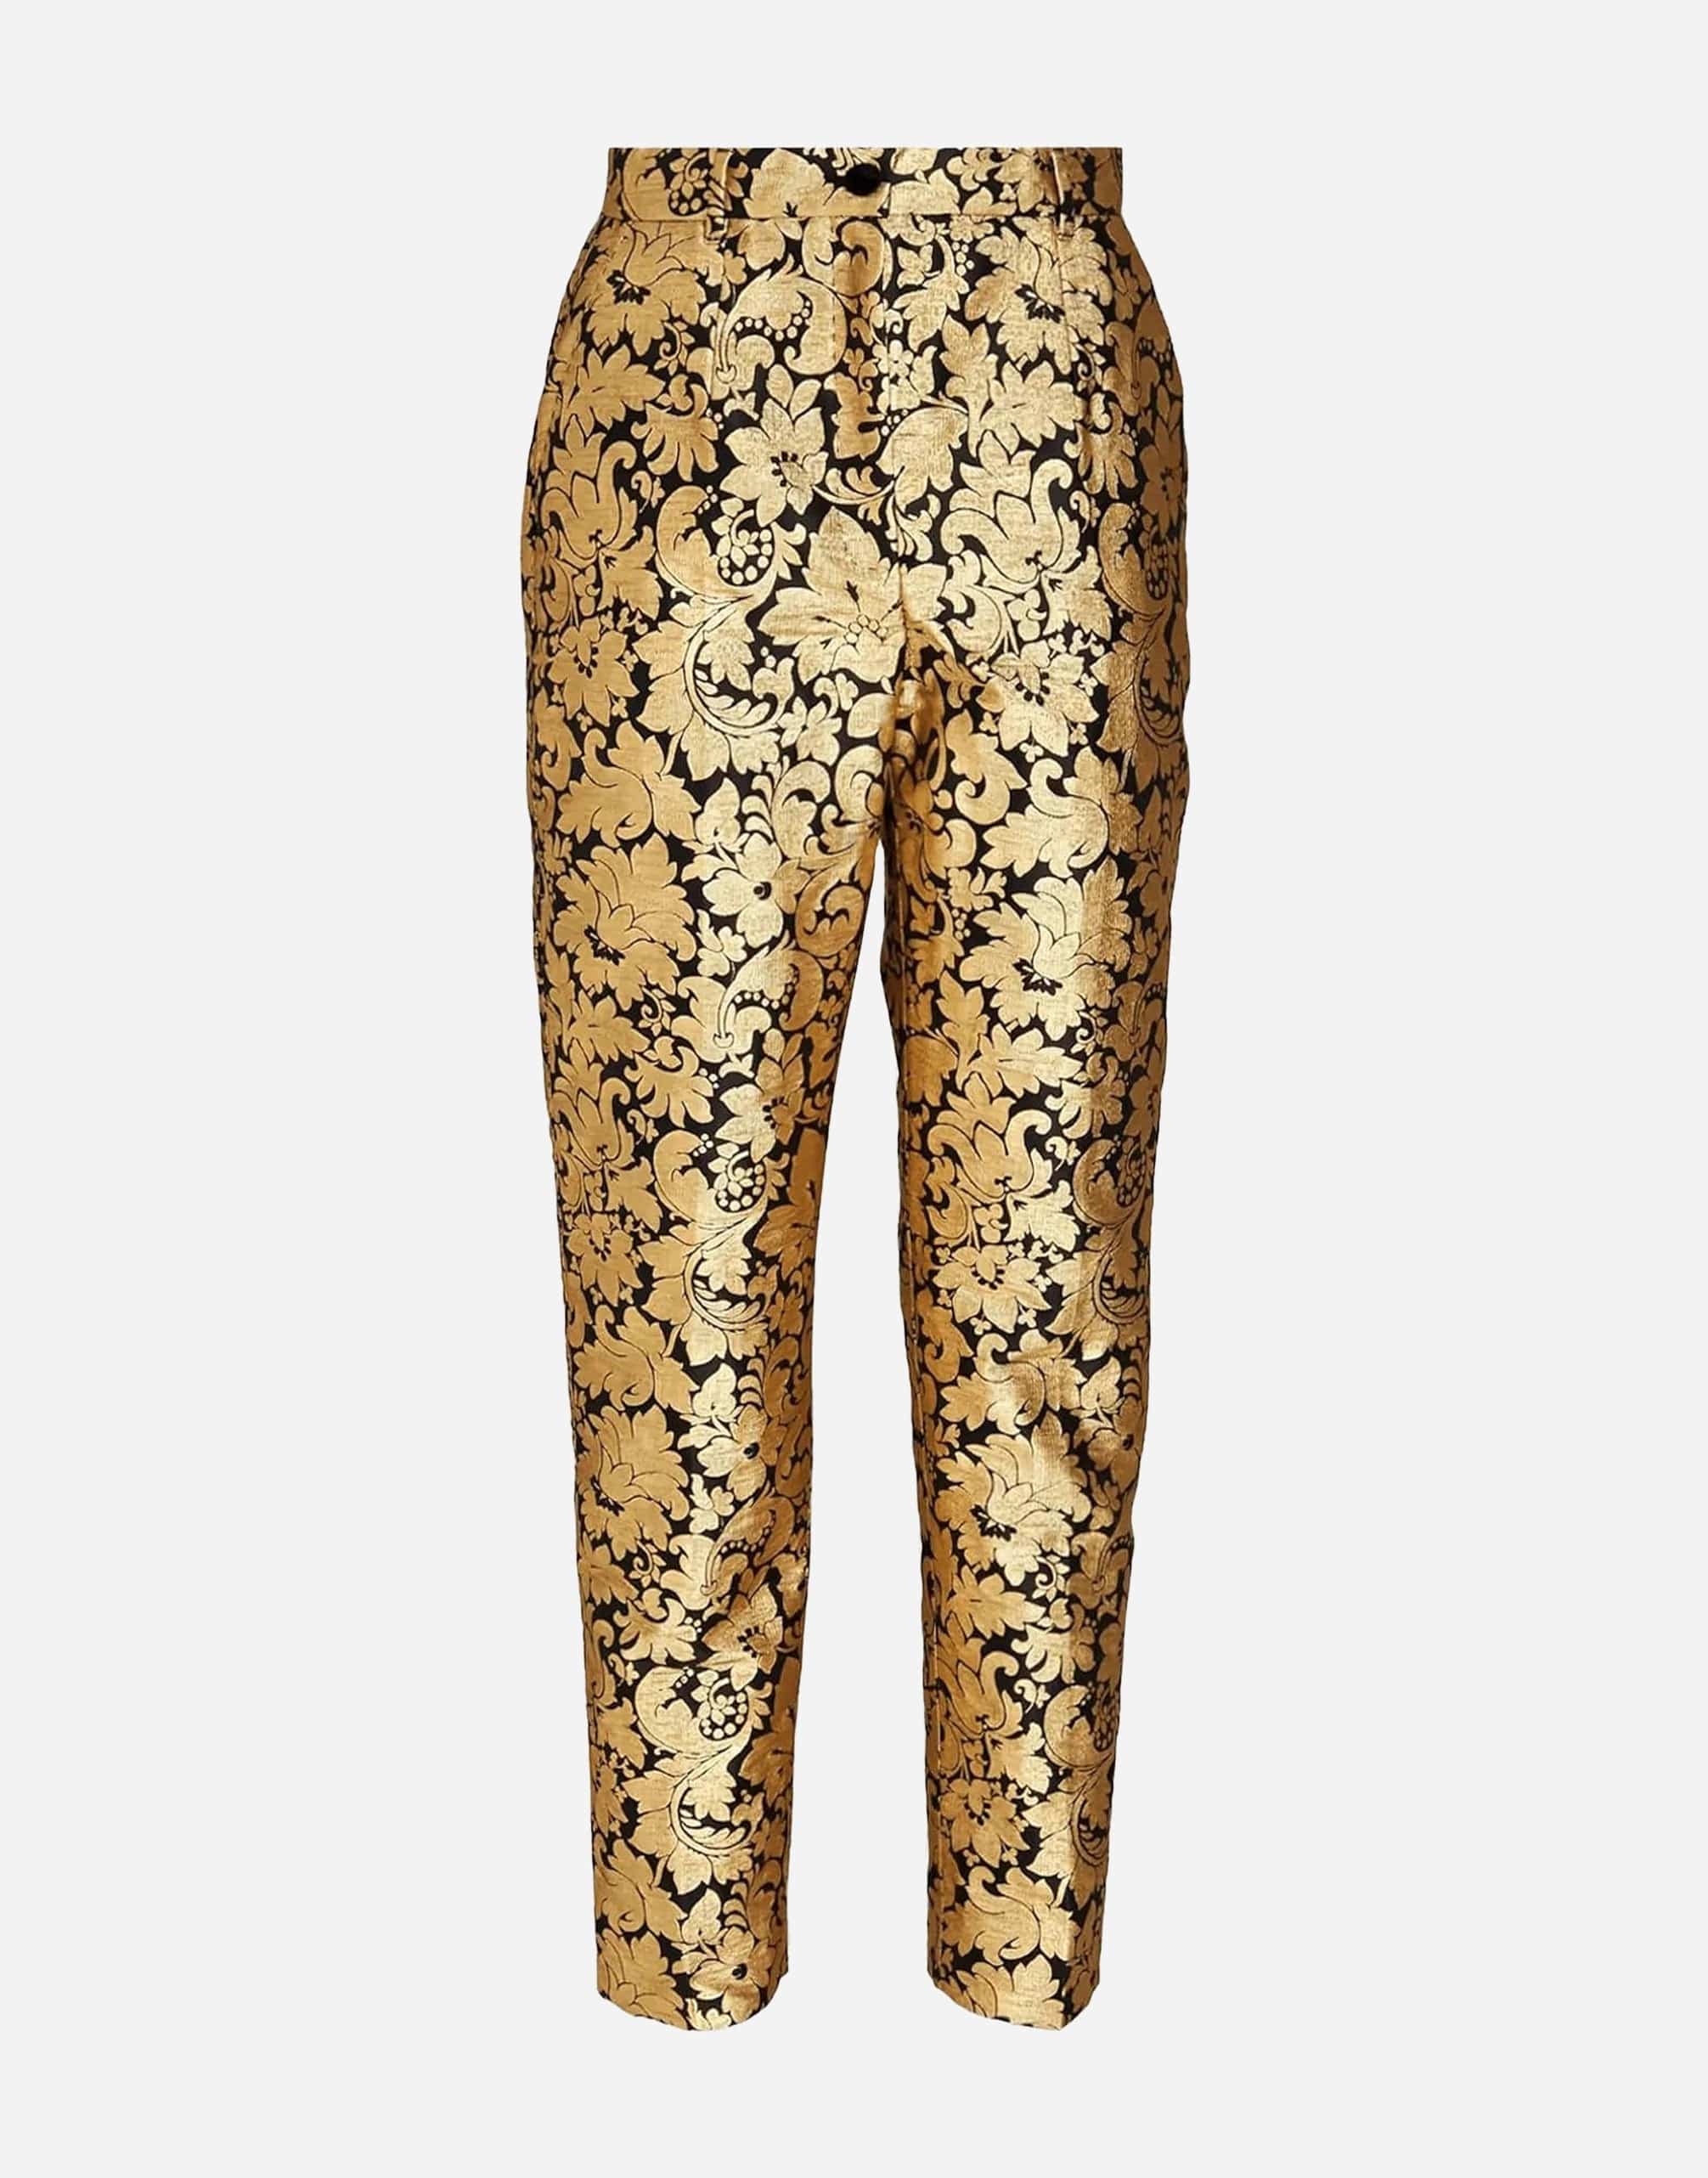 Dolce & Gabbana Metallic Jacquard Pants